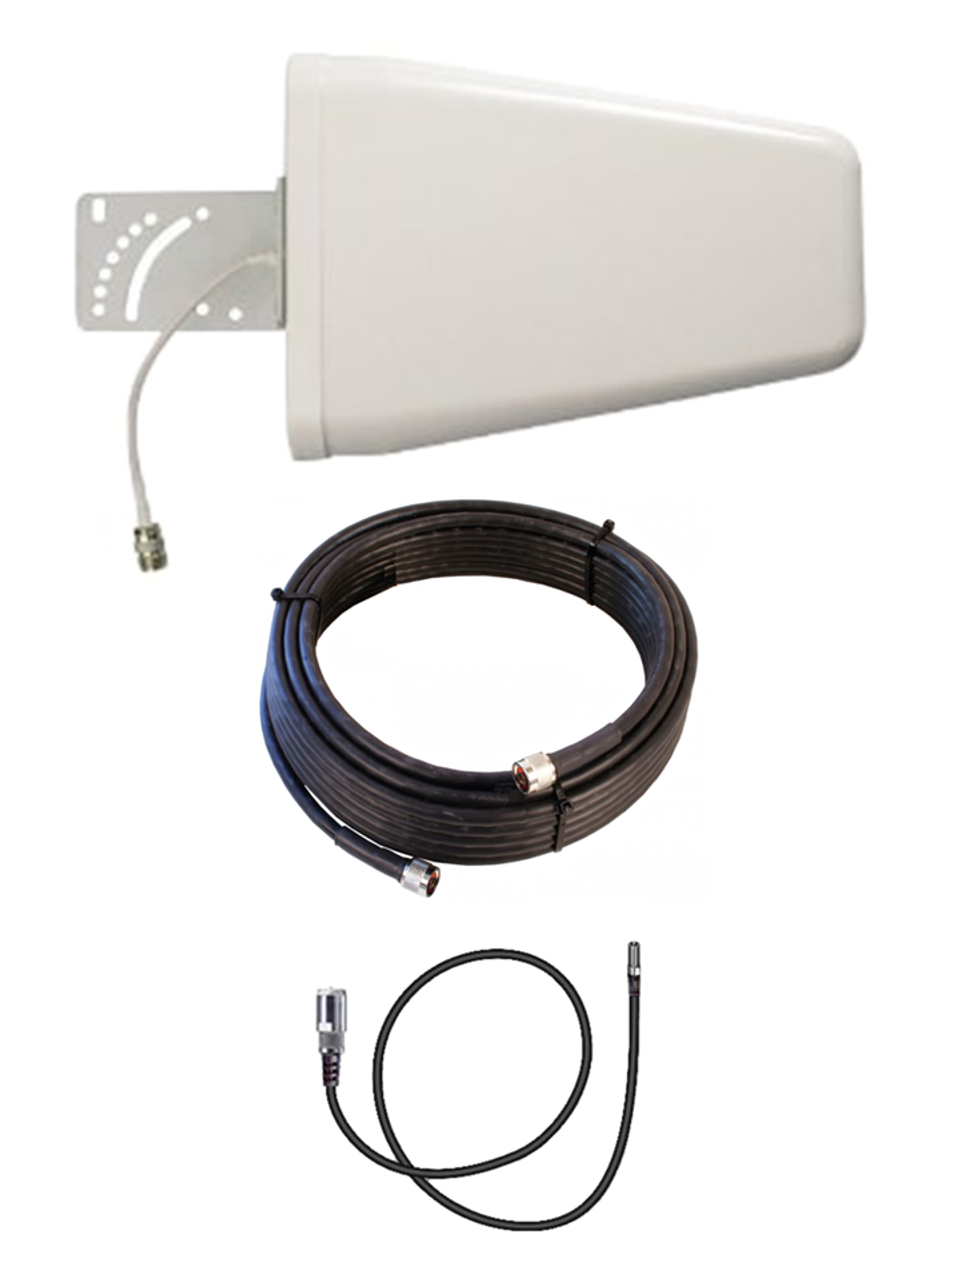 10dB Yagi 4G 5G LTE Antenna Kit for AT&T Netgear Nighthawk 5G MR5000 w/ Cable Length Options